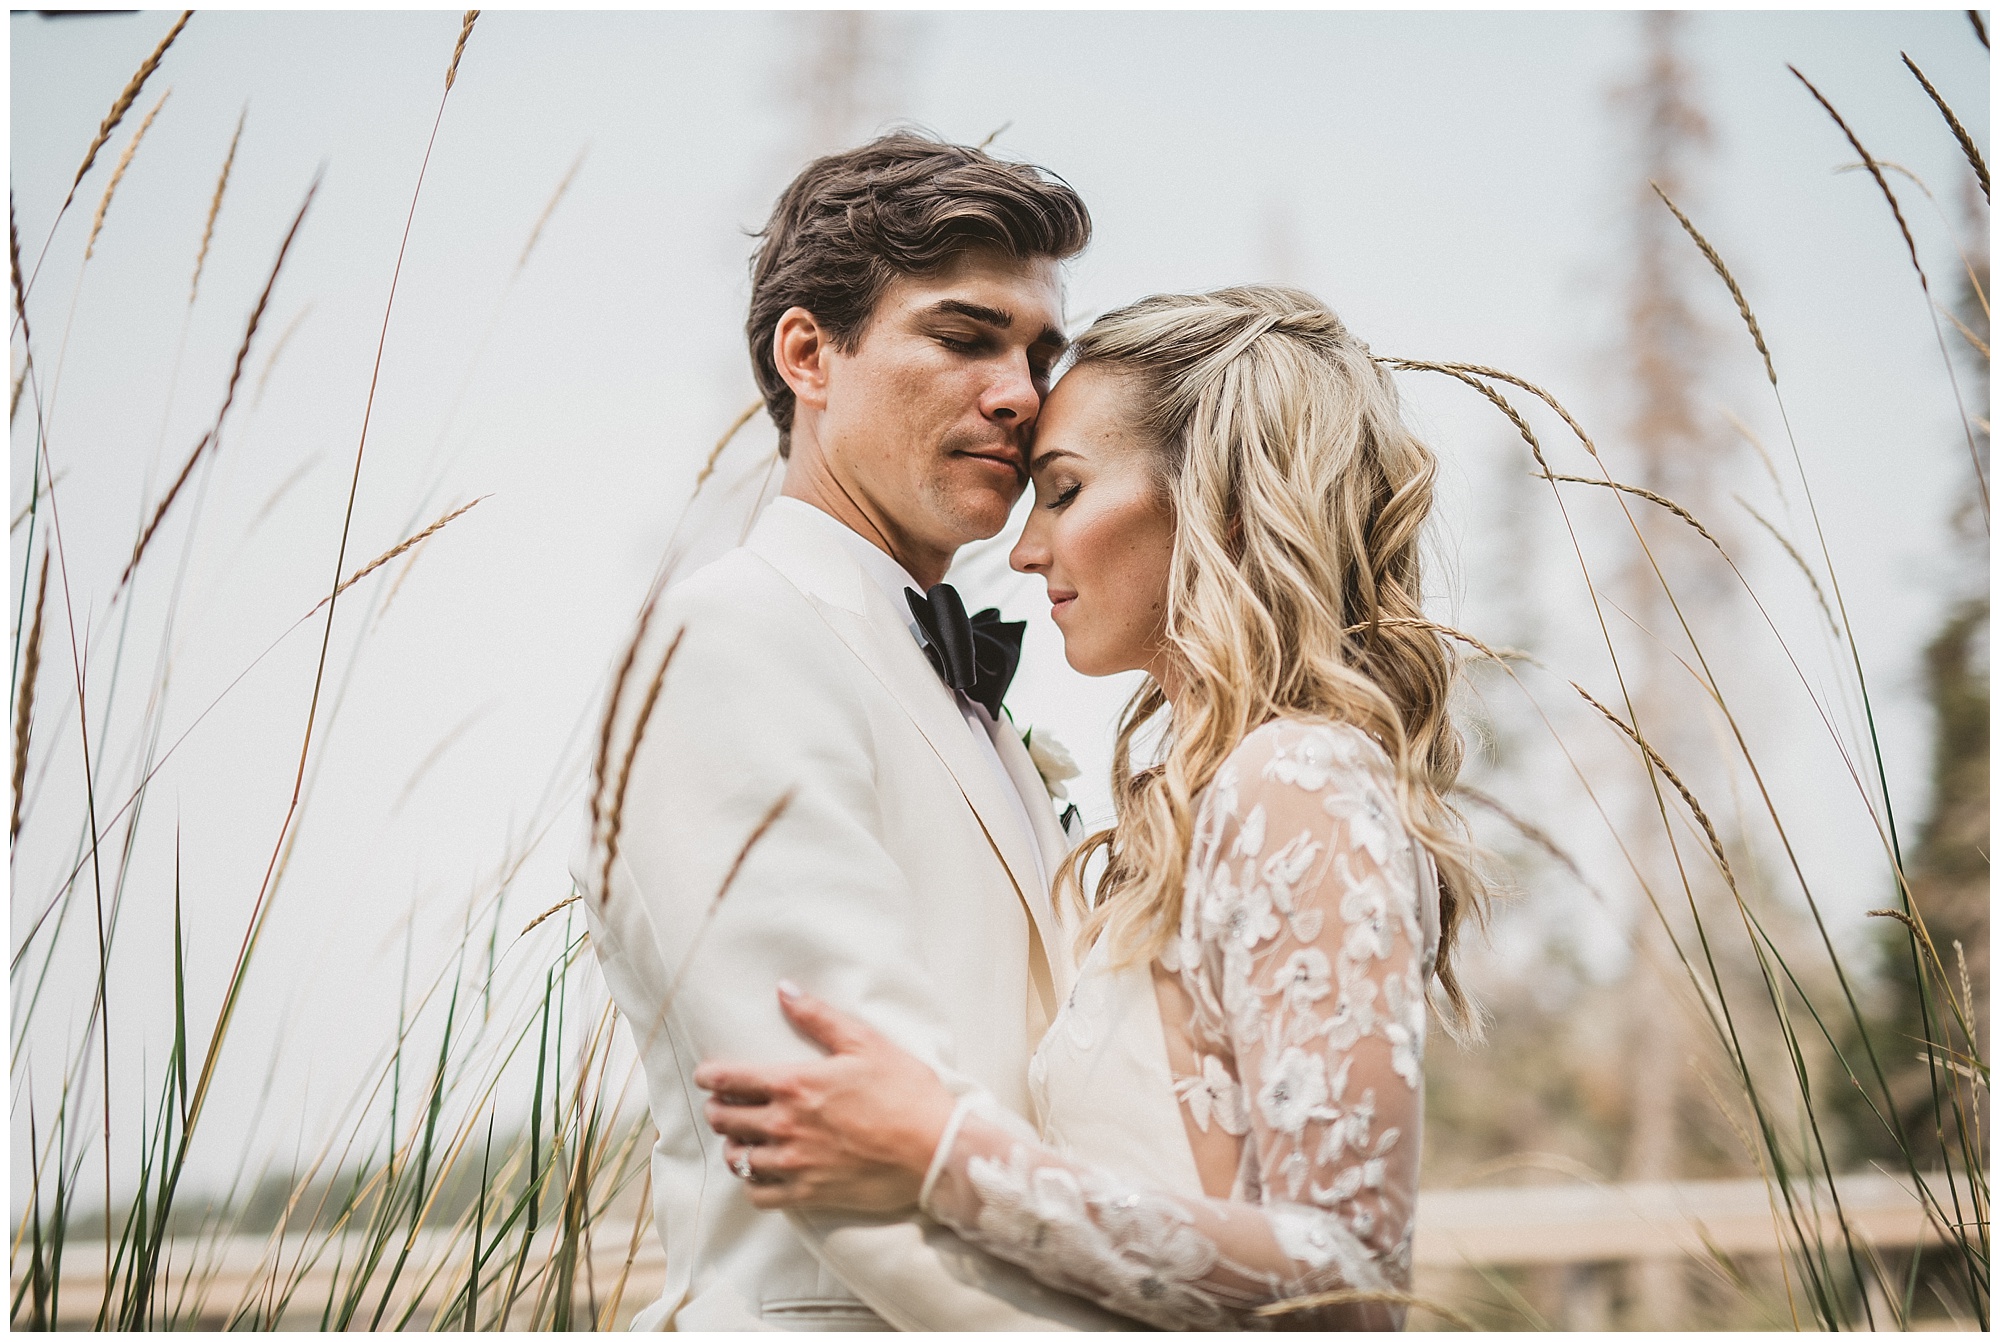 Matt-and-Danielle-park-City-Utah-mountain-wedding-at-the-Stein-Eriksen-lodge_0001